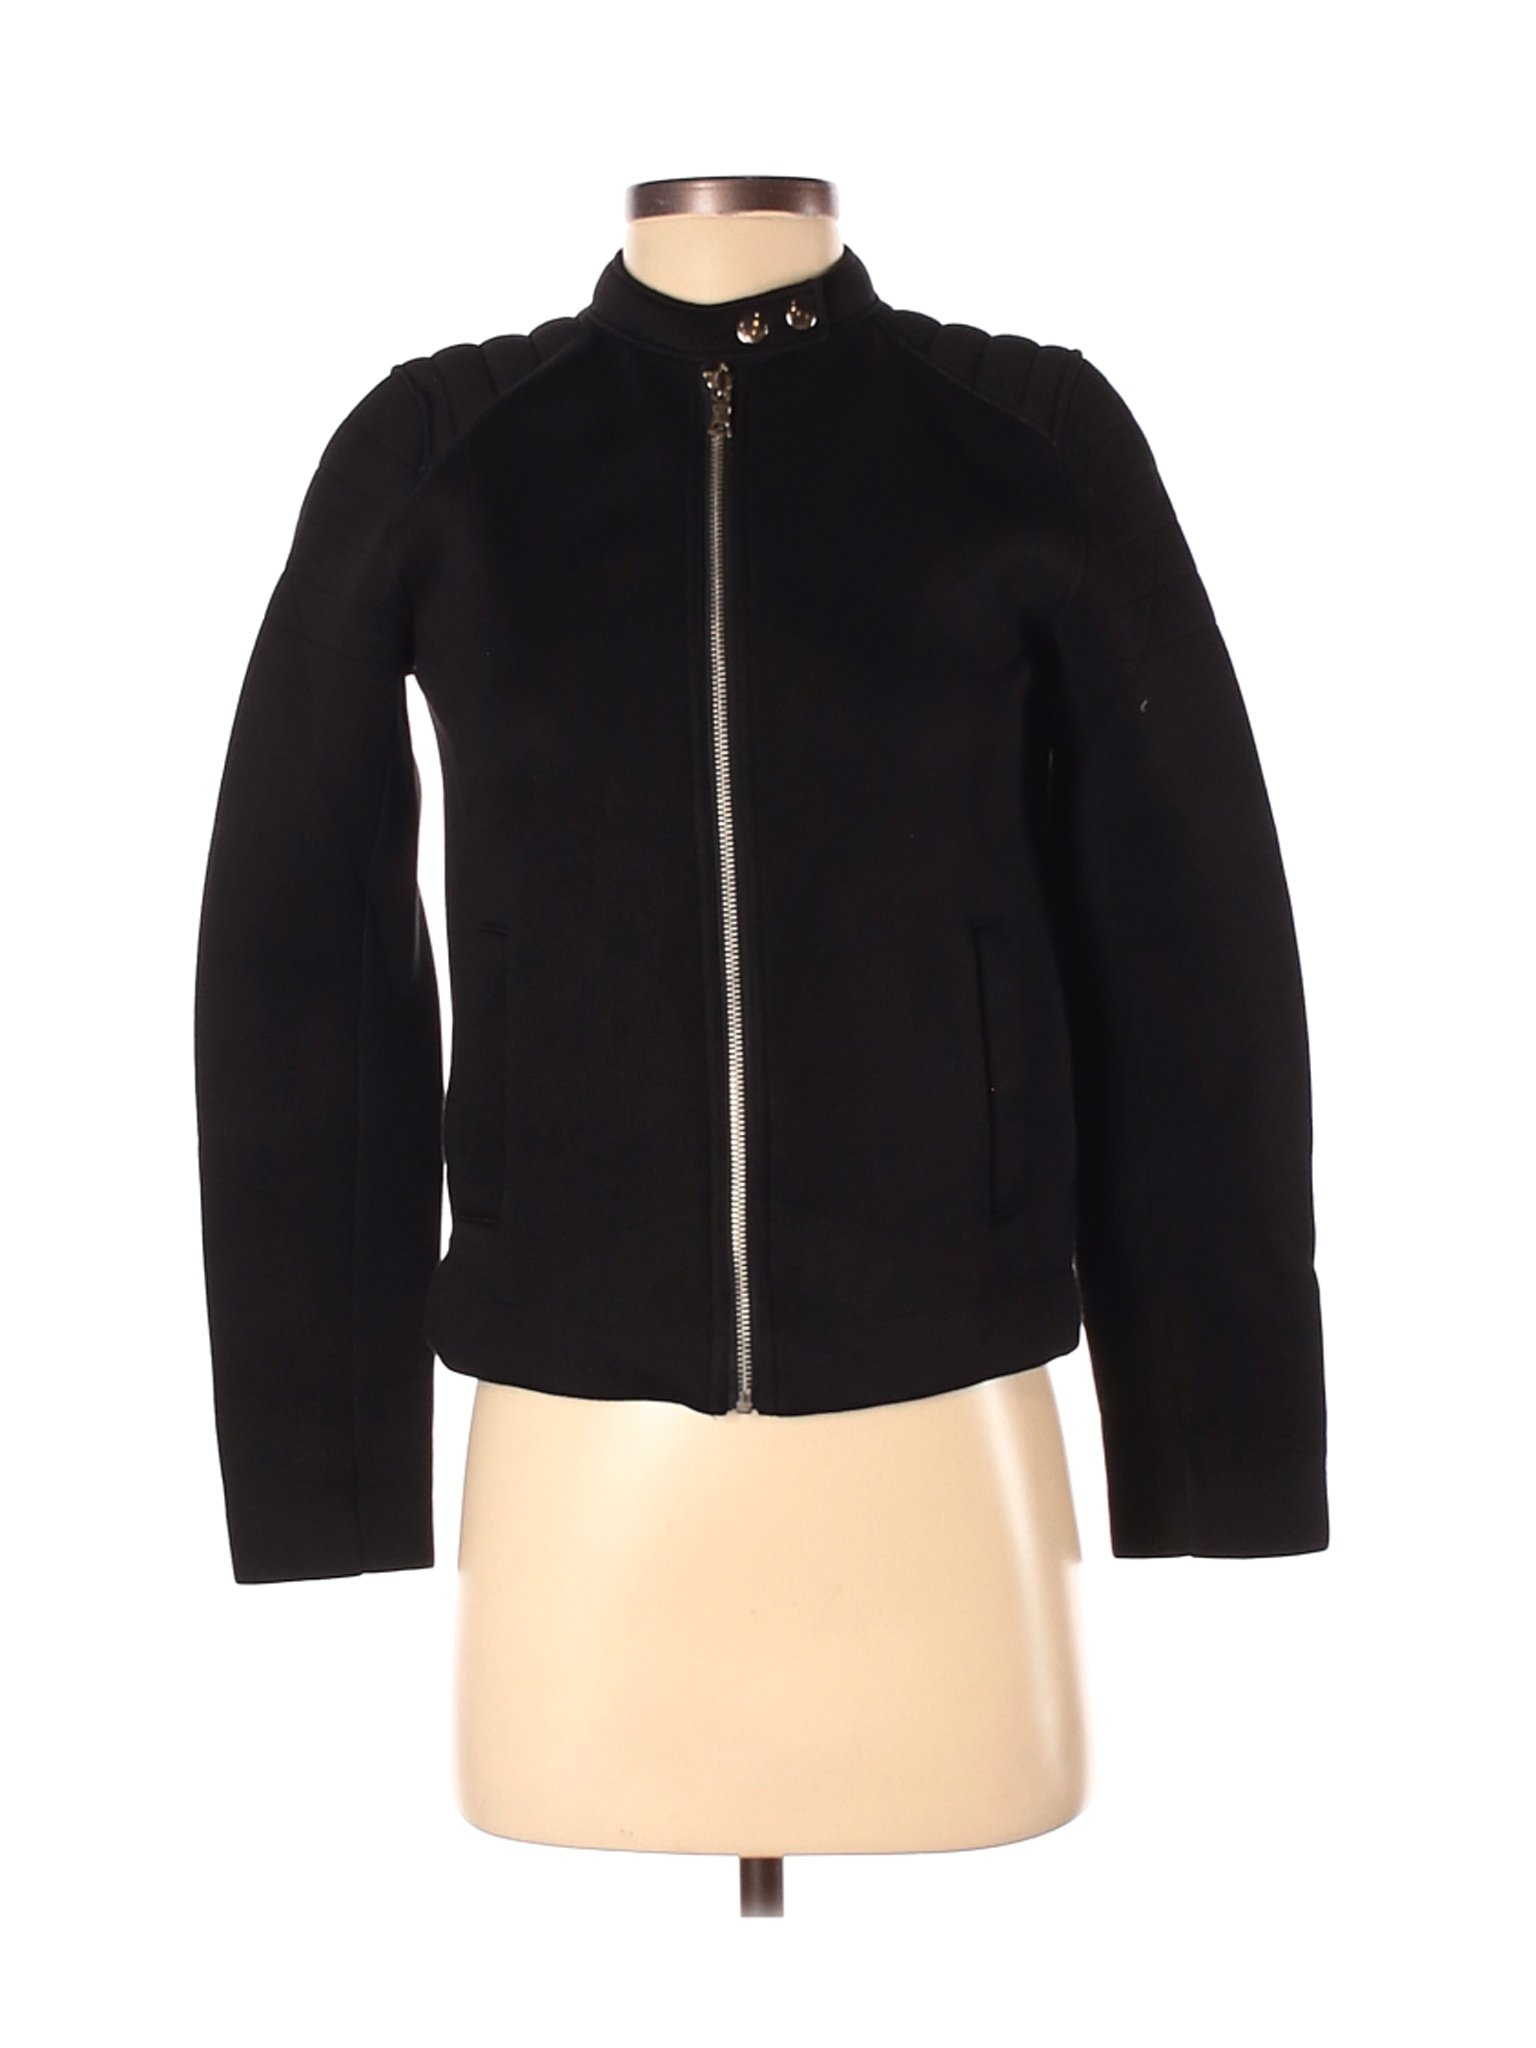 Gap Women Black Jacket XS | eBay